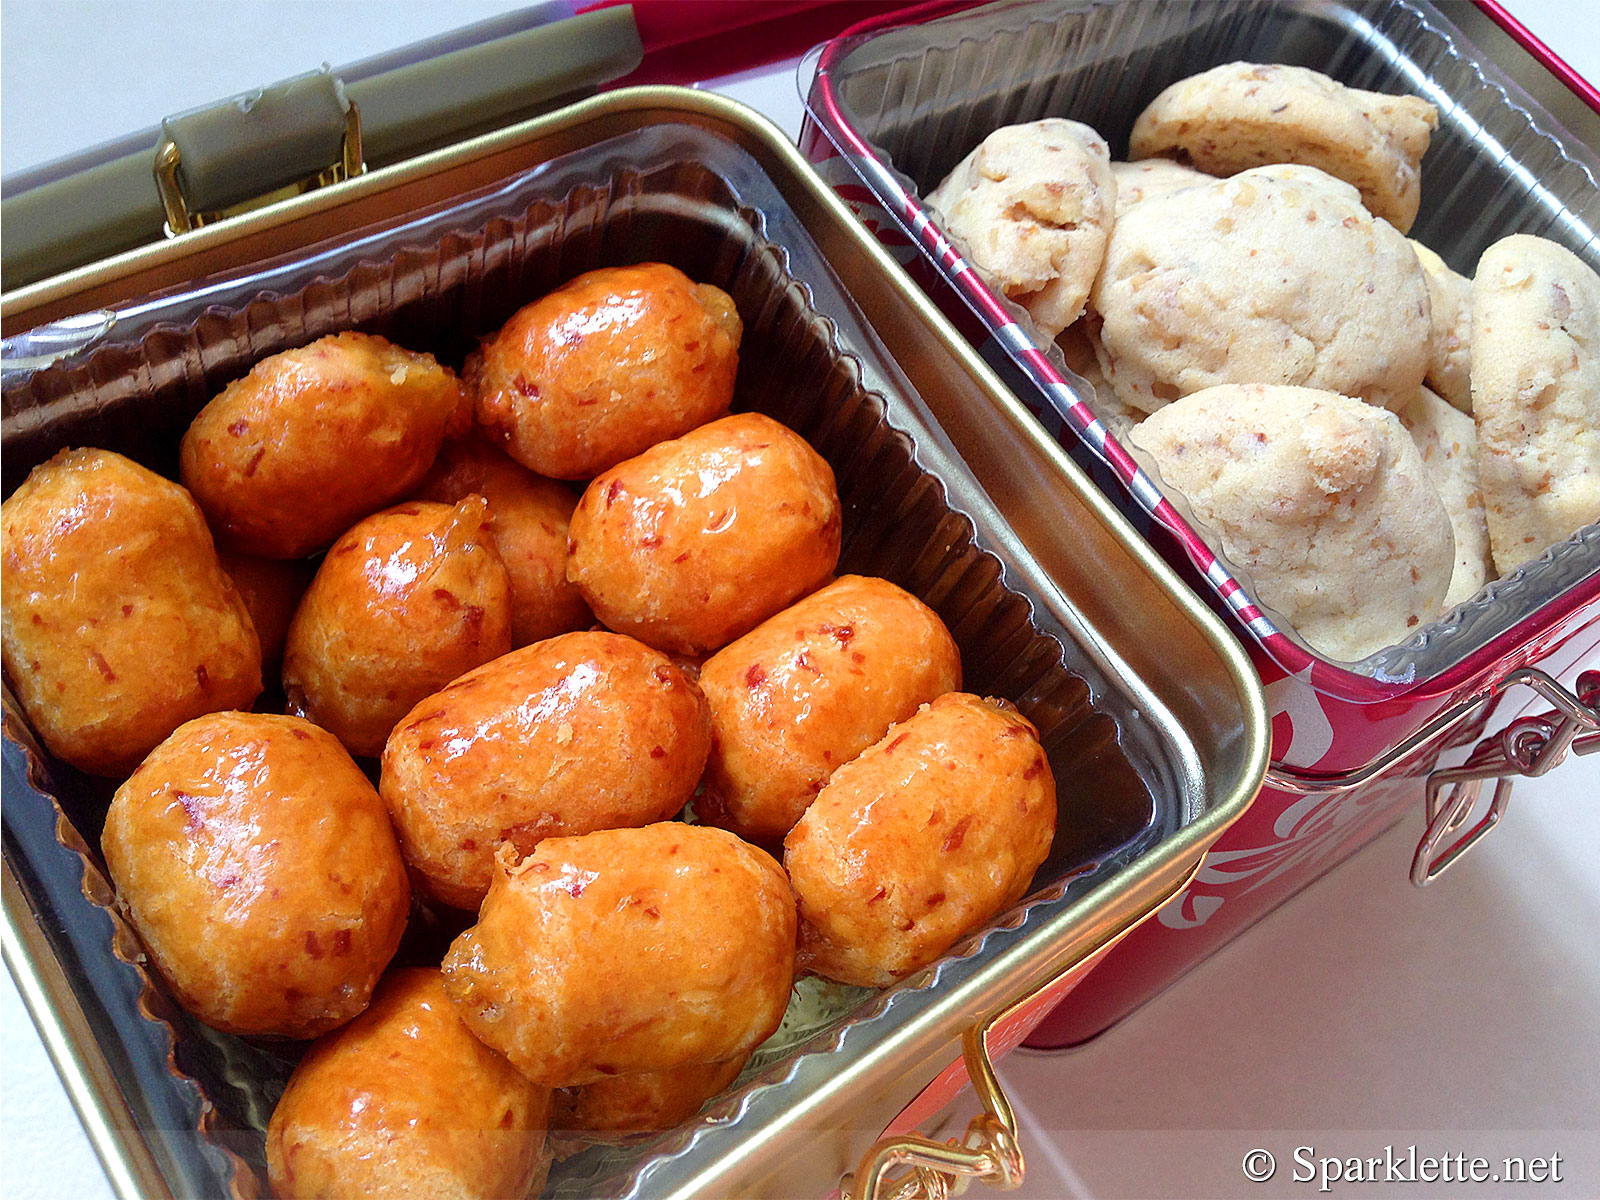 Chinese New Year cheese pineapple tarts from PrimaDéli